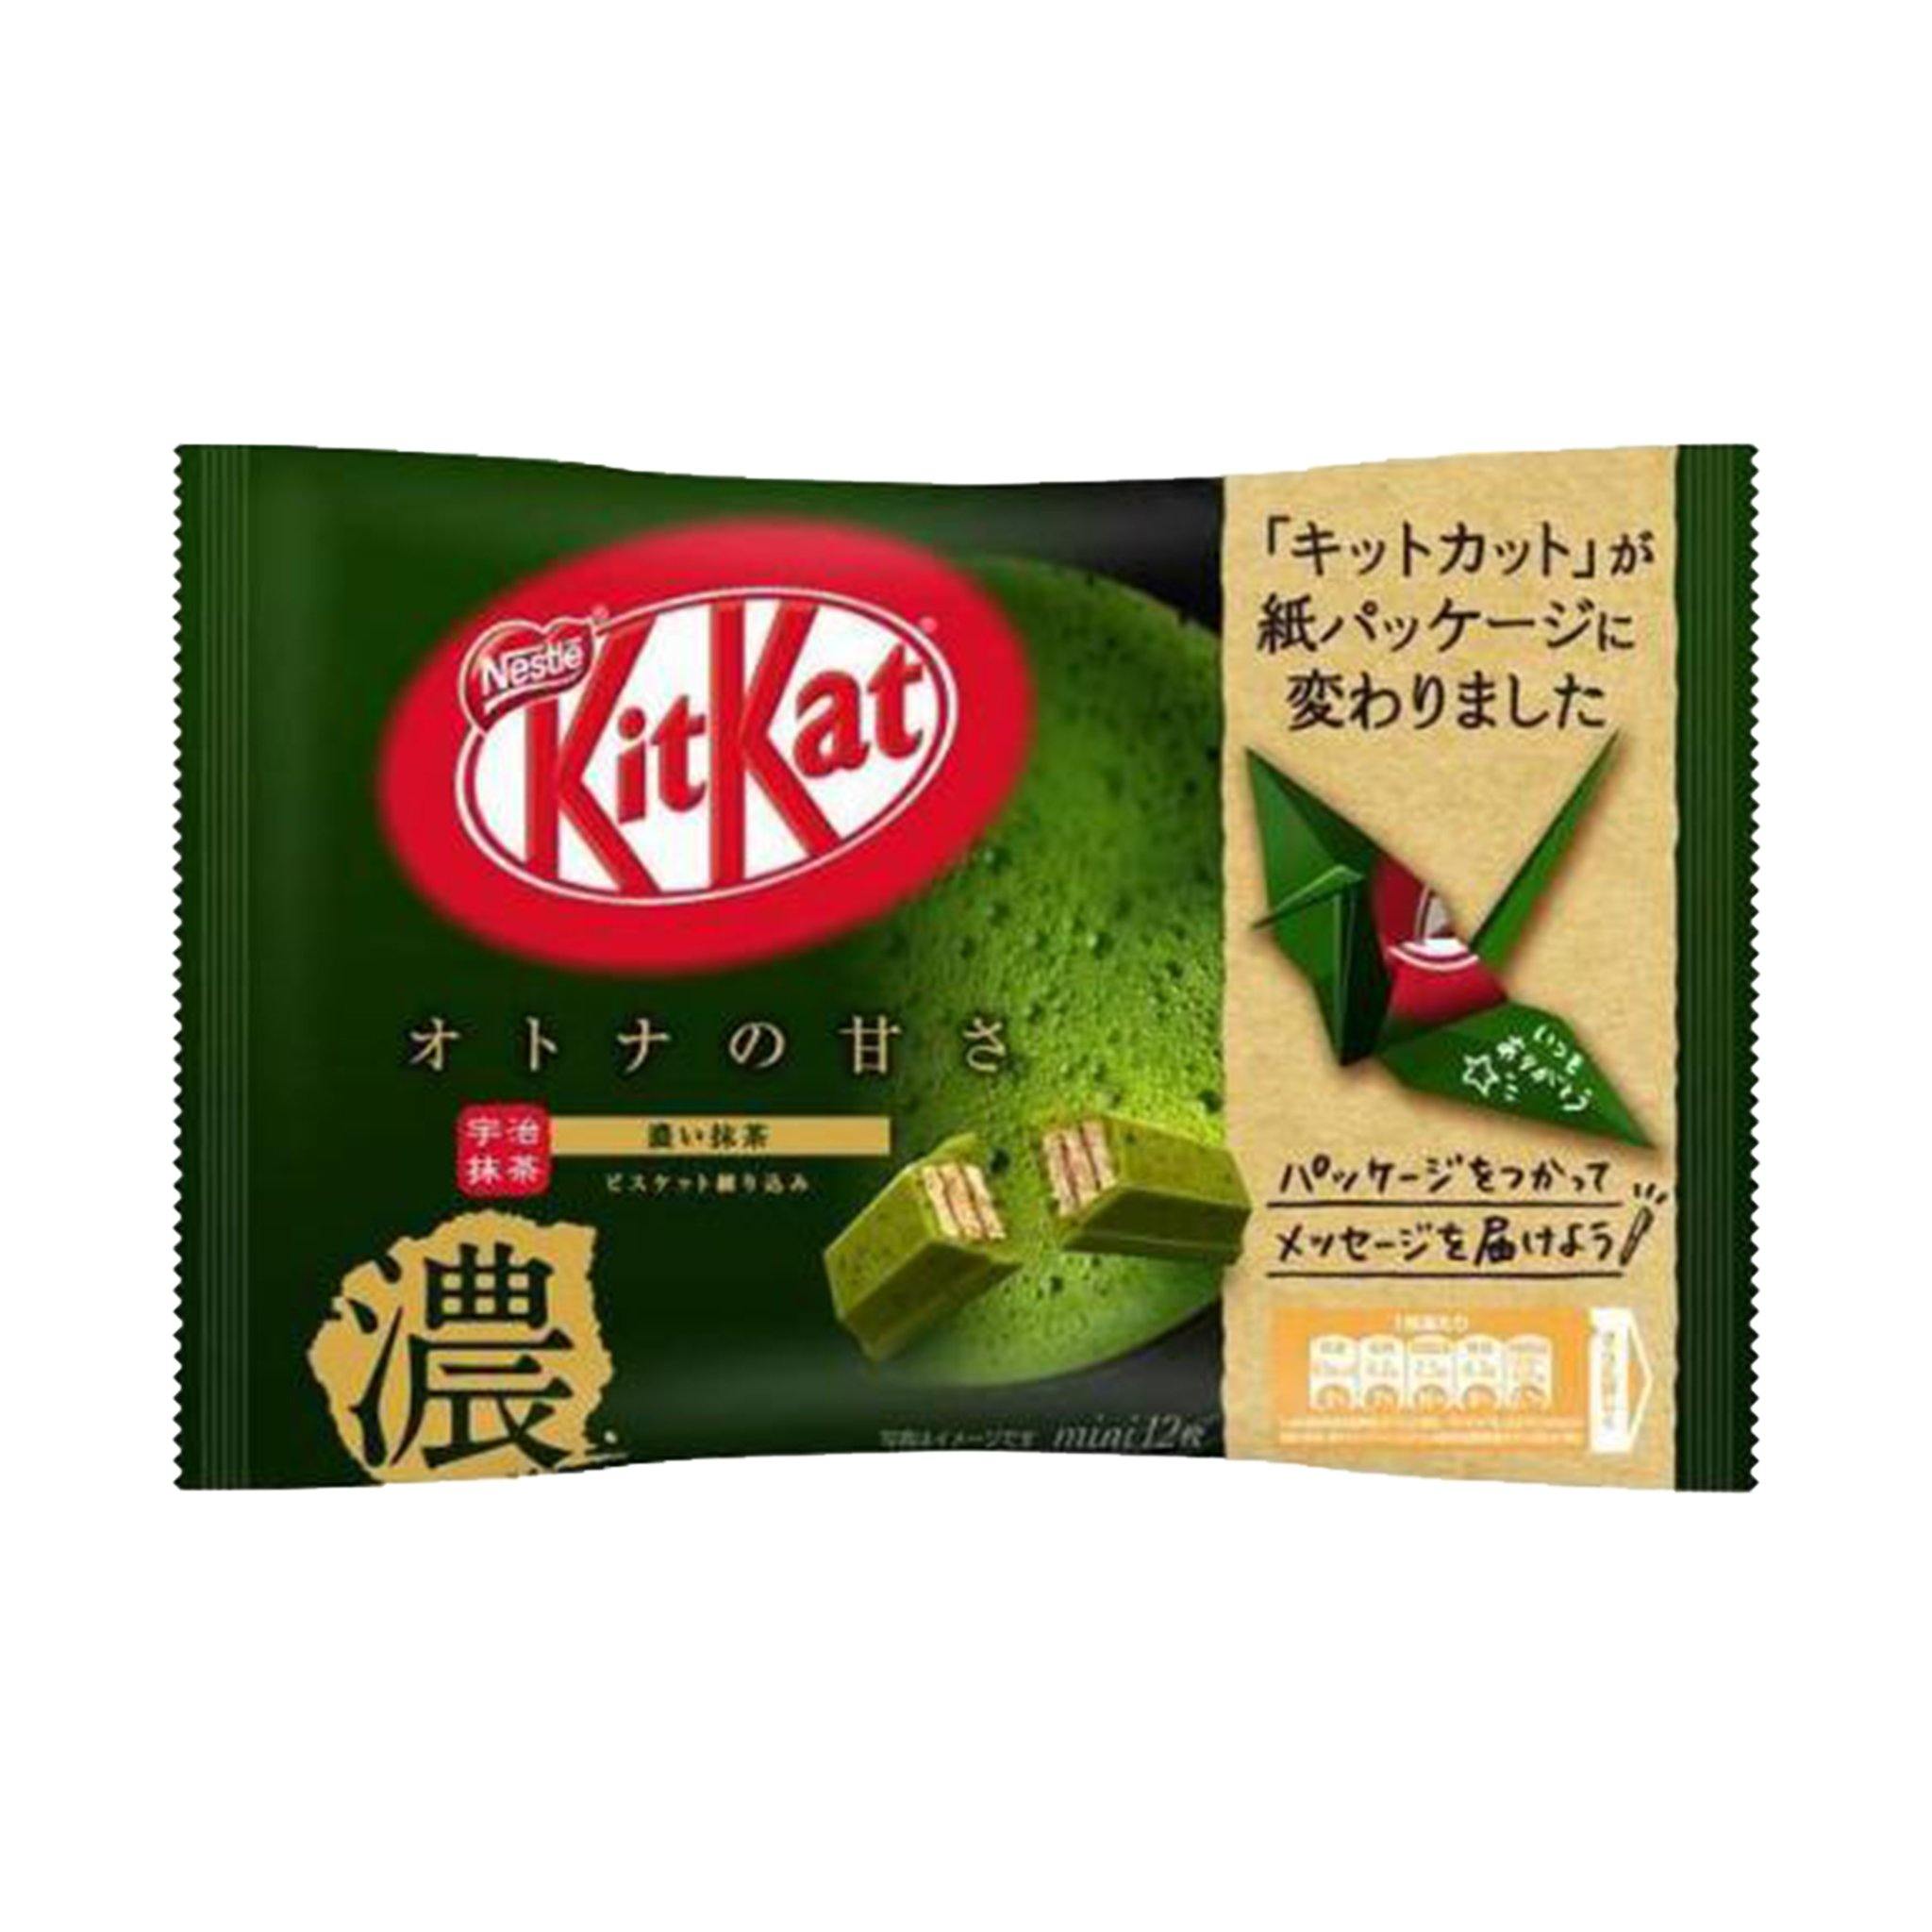 Kit Kat Matcha - Japan - Sweet Exotics